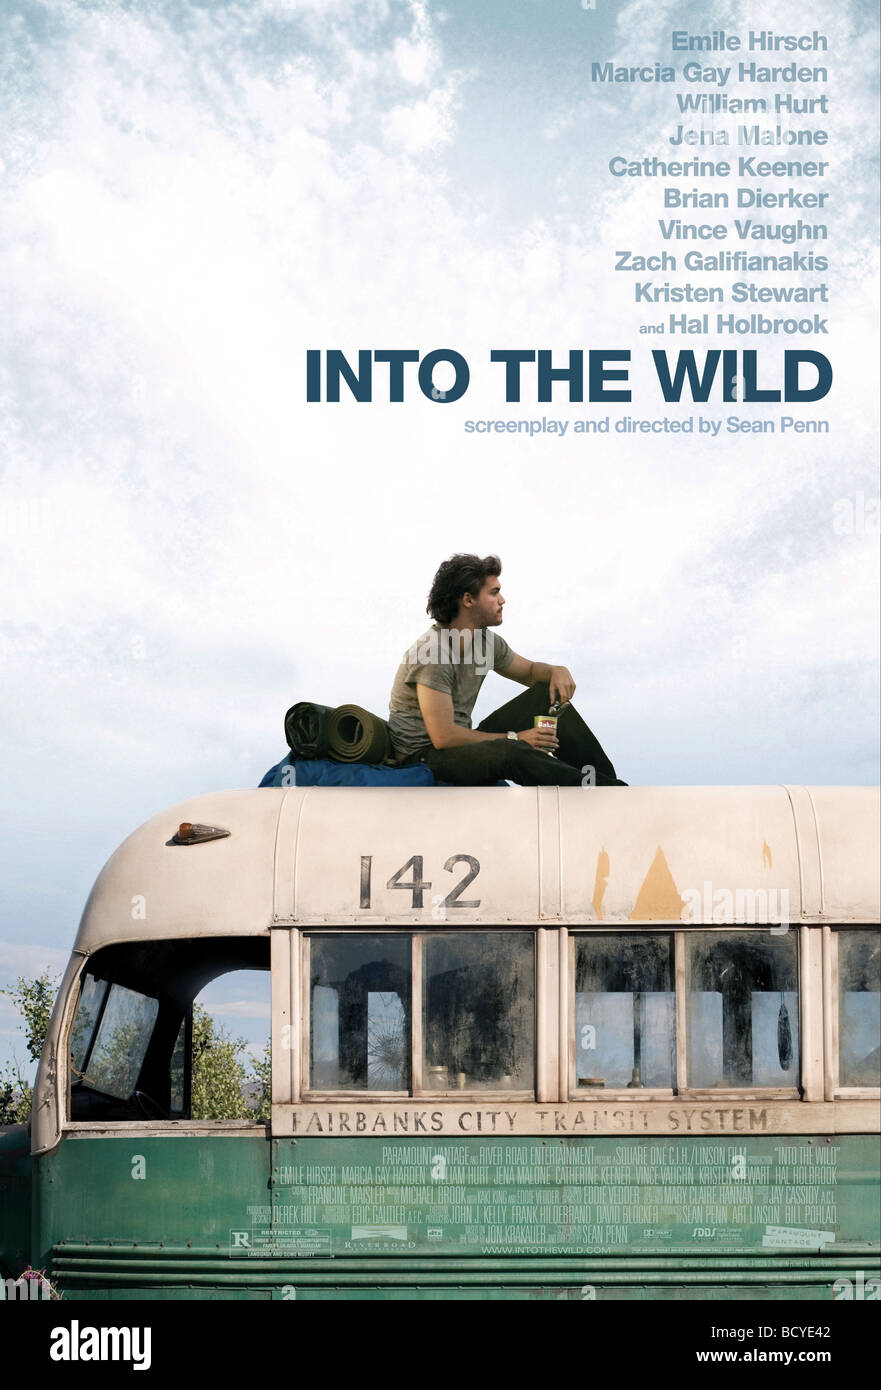 Into the Wild Year : 2007  Director : Sean Penn Emile Hirsch  Movie poster (USA) Stock Photo